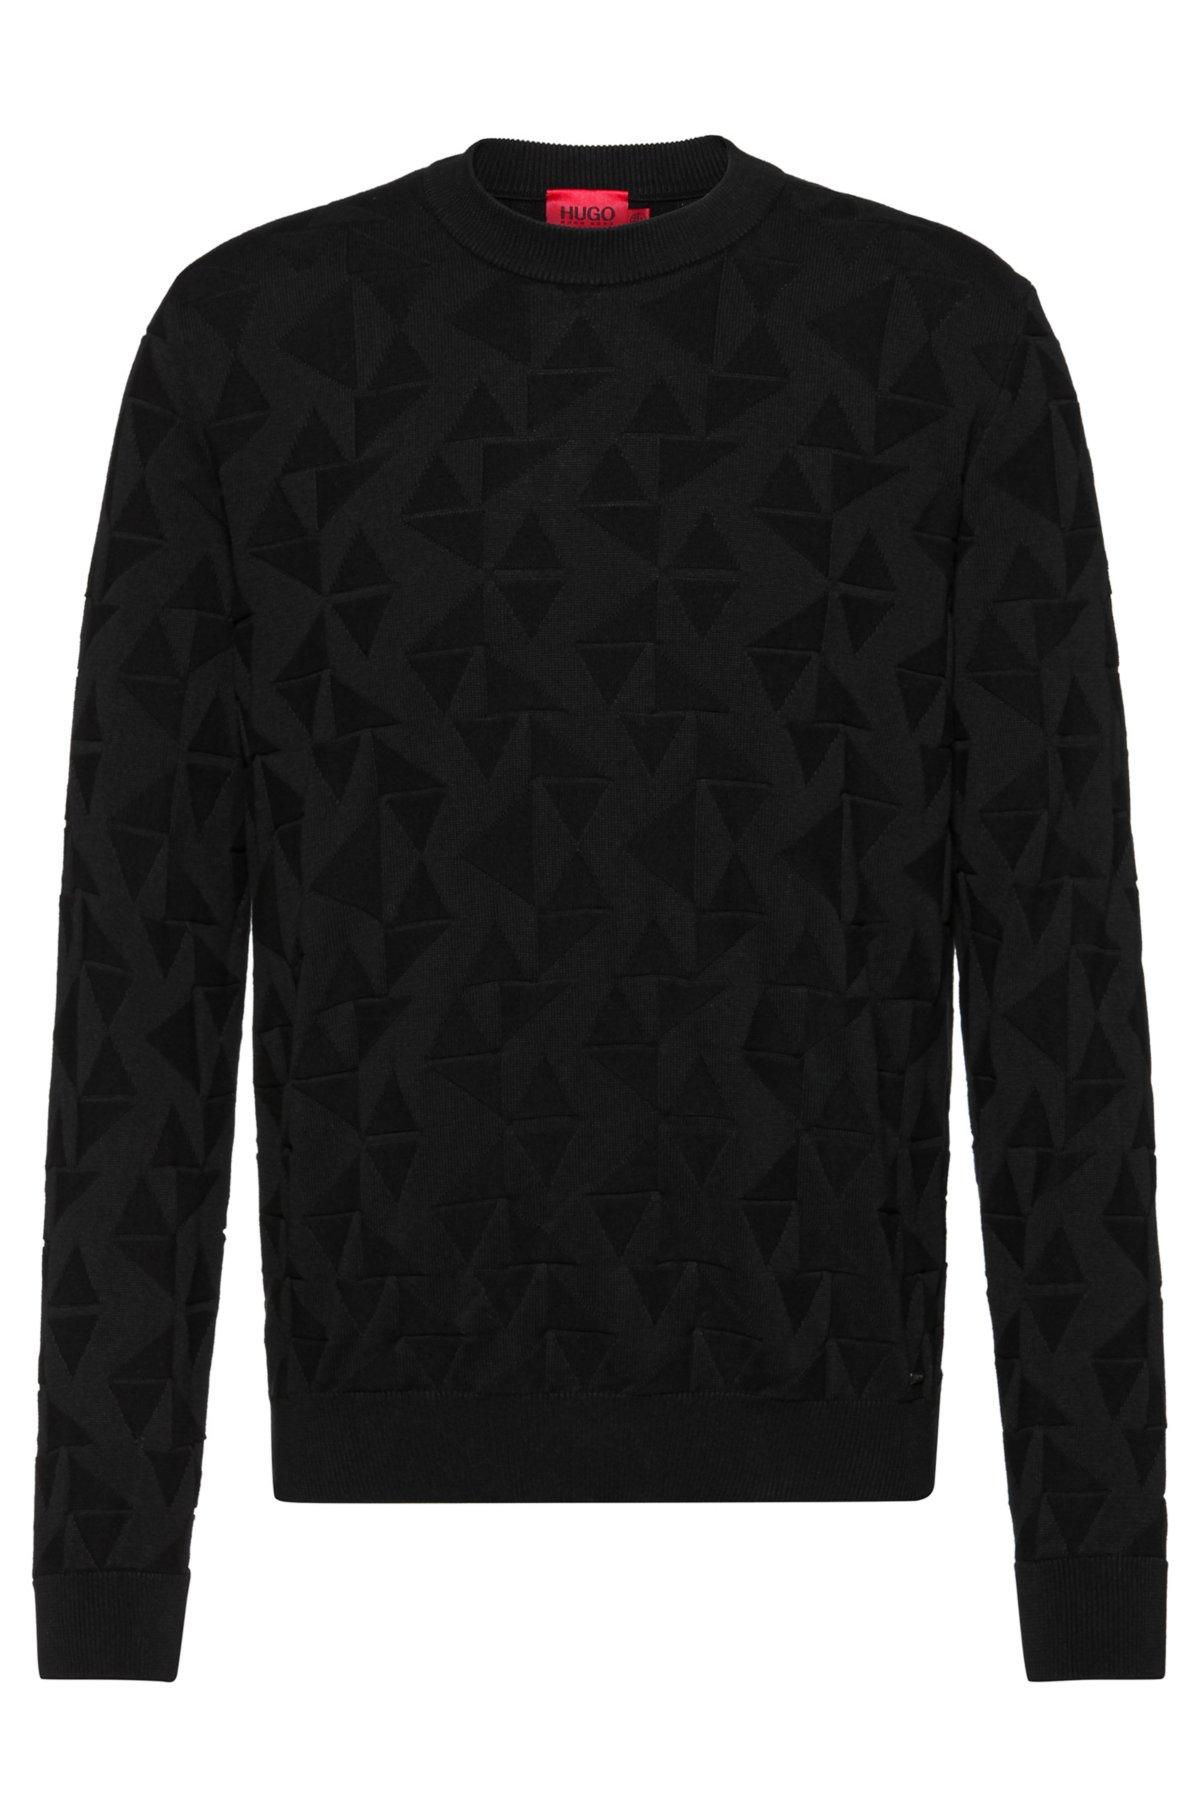 Louis Vuitton Mens Sweatshirts, Black, XXL (Stock Confirmation Required)